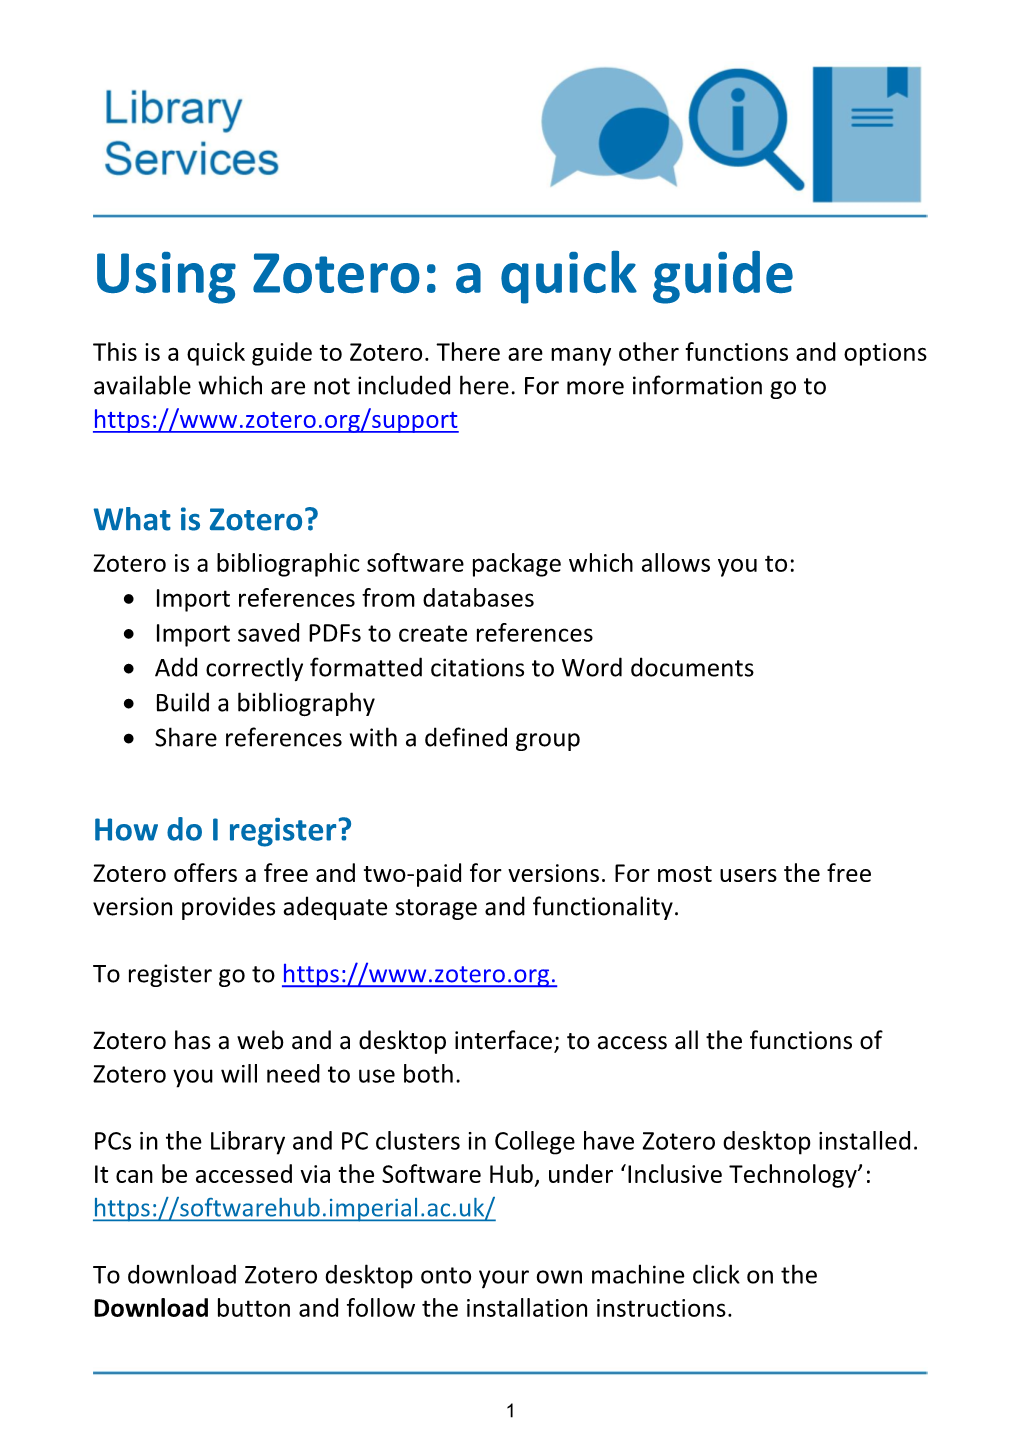 Using Zotero: a Quick Guide